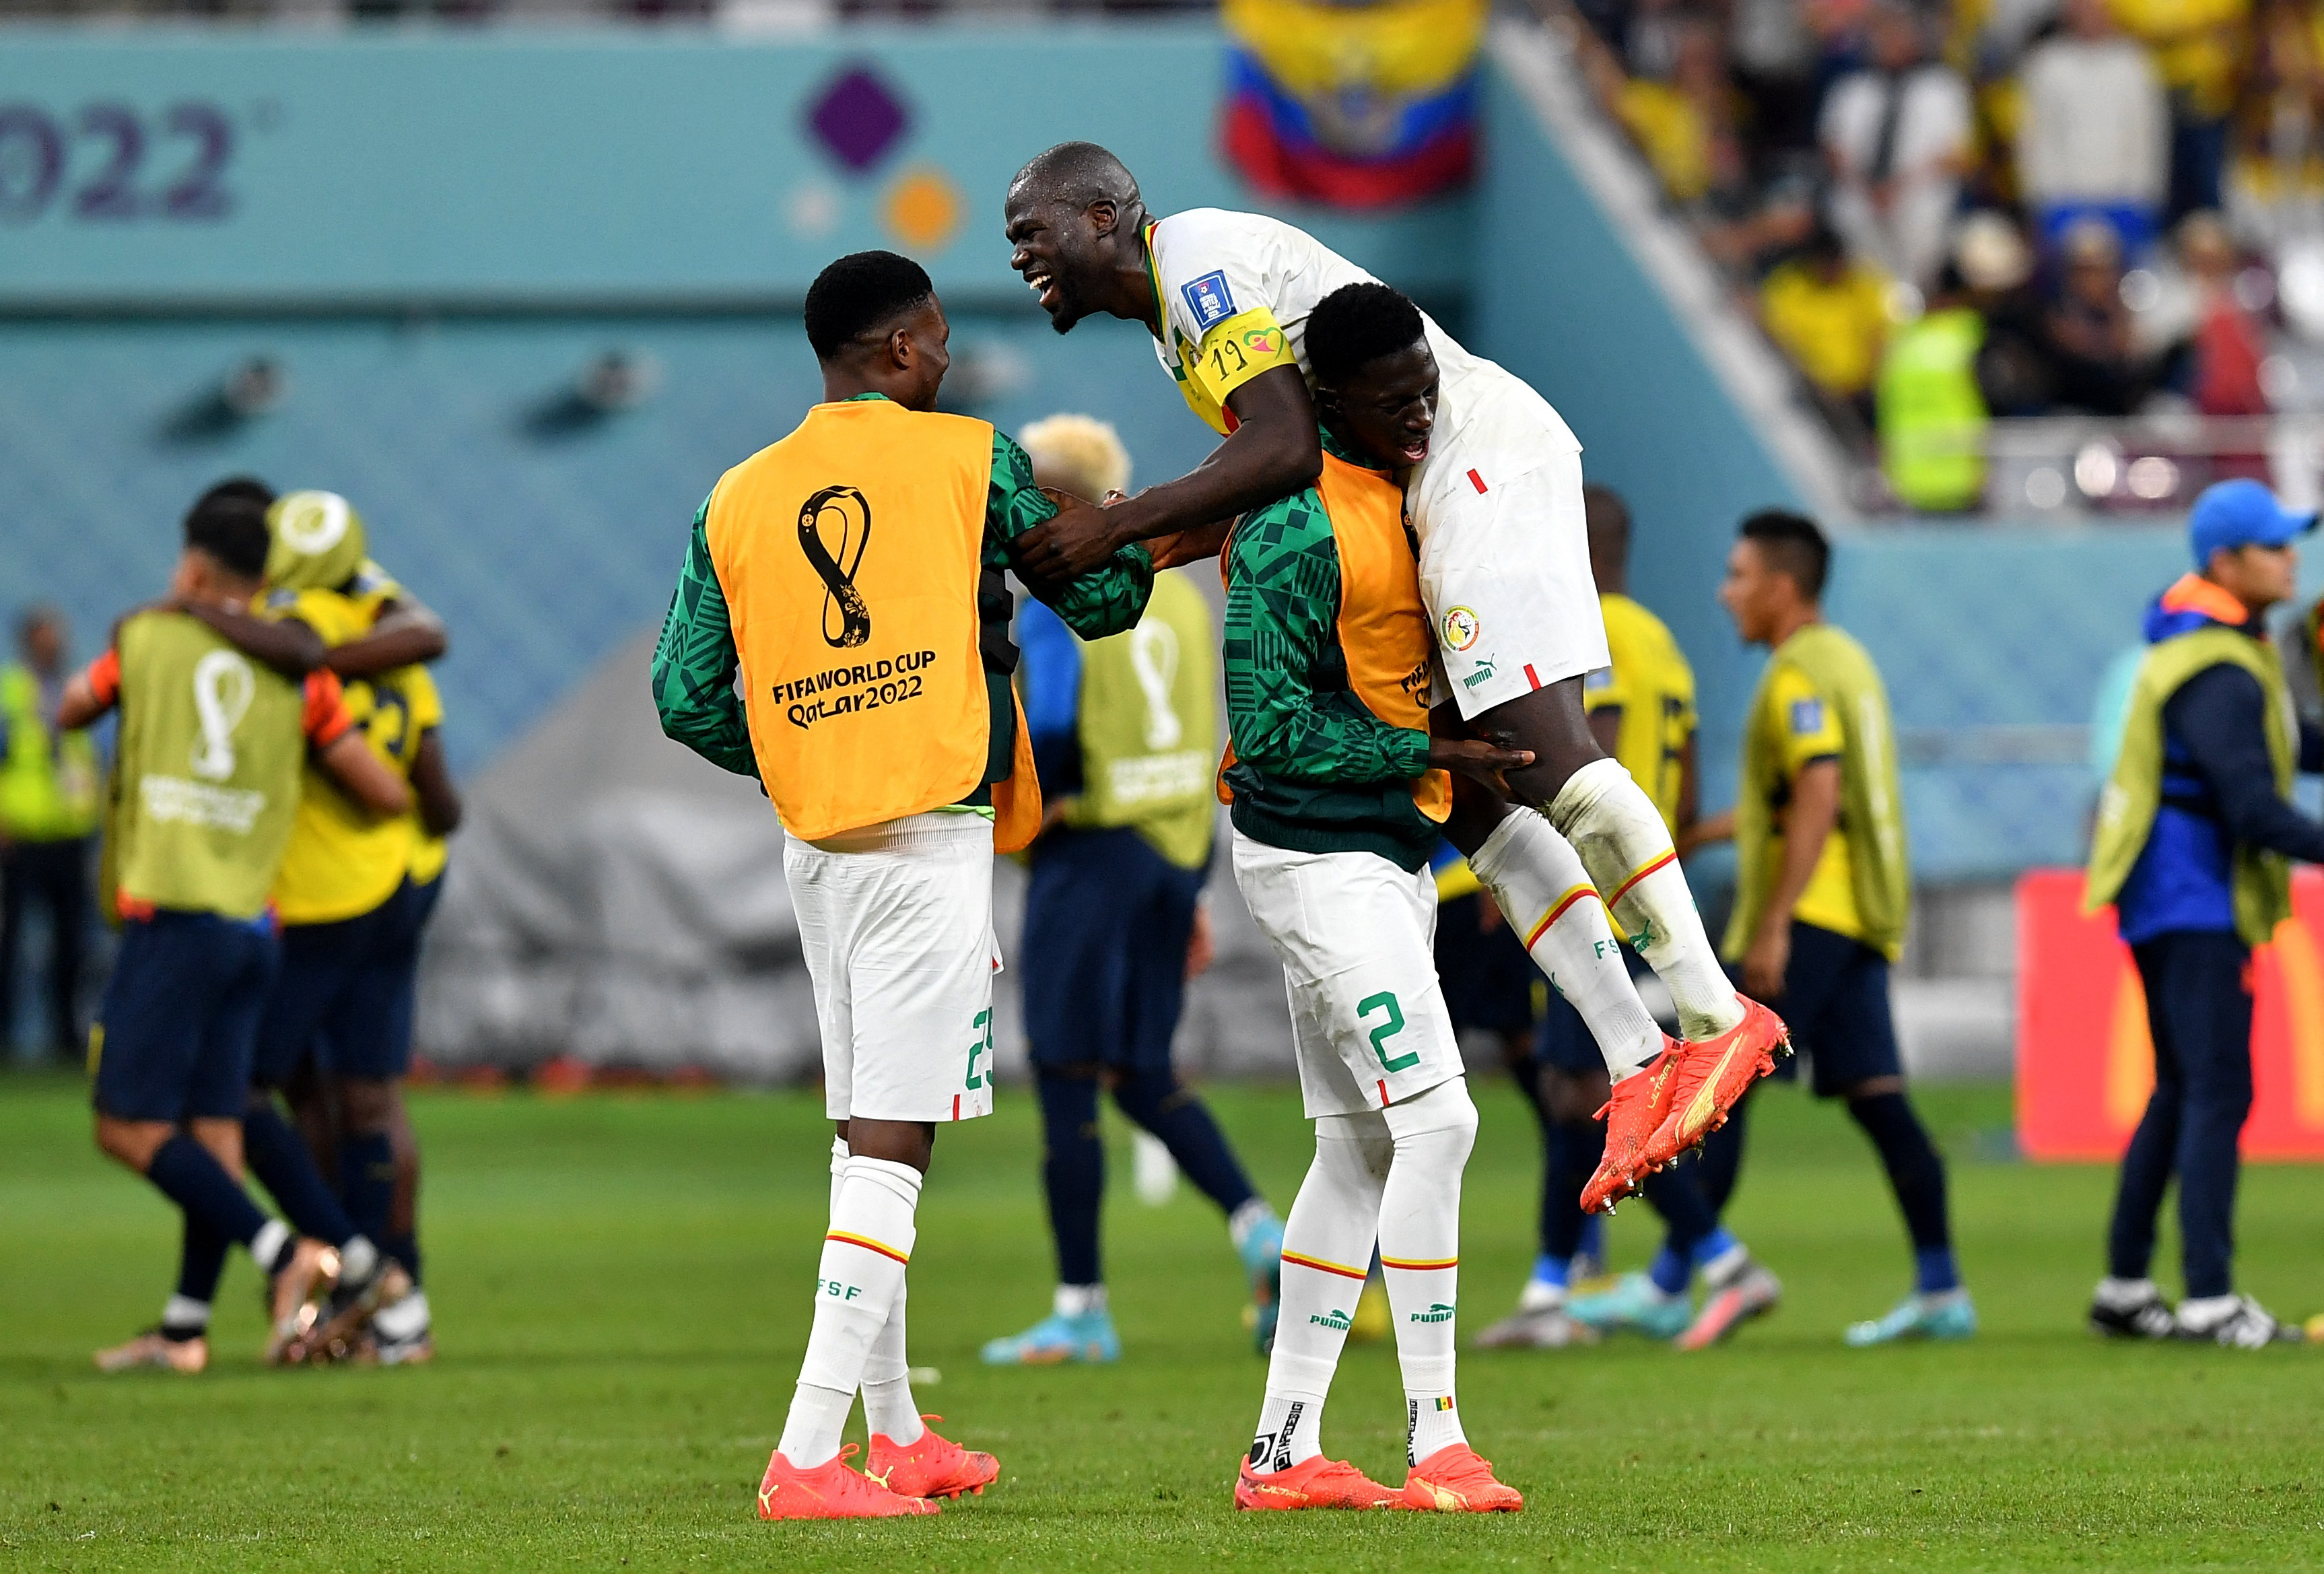 Senegal pasa a los octavos de final del mundial, tras derrotar 2 - 1 a Ecuador, en el último partido de la fase de grupos del Mundial Qatar 2022. REUTERS/Jennifer Lorenzini